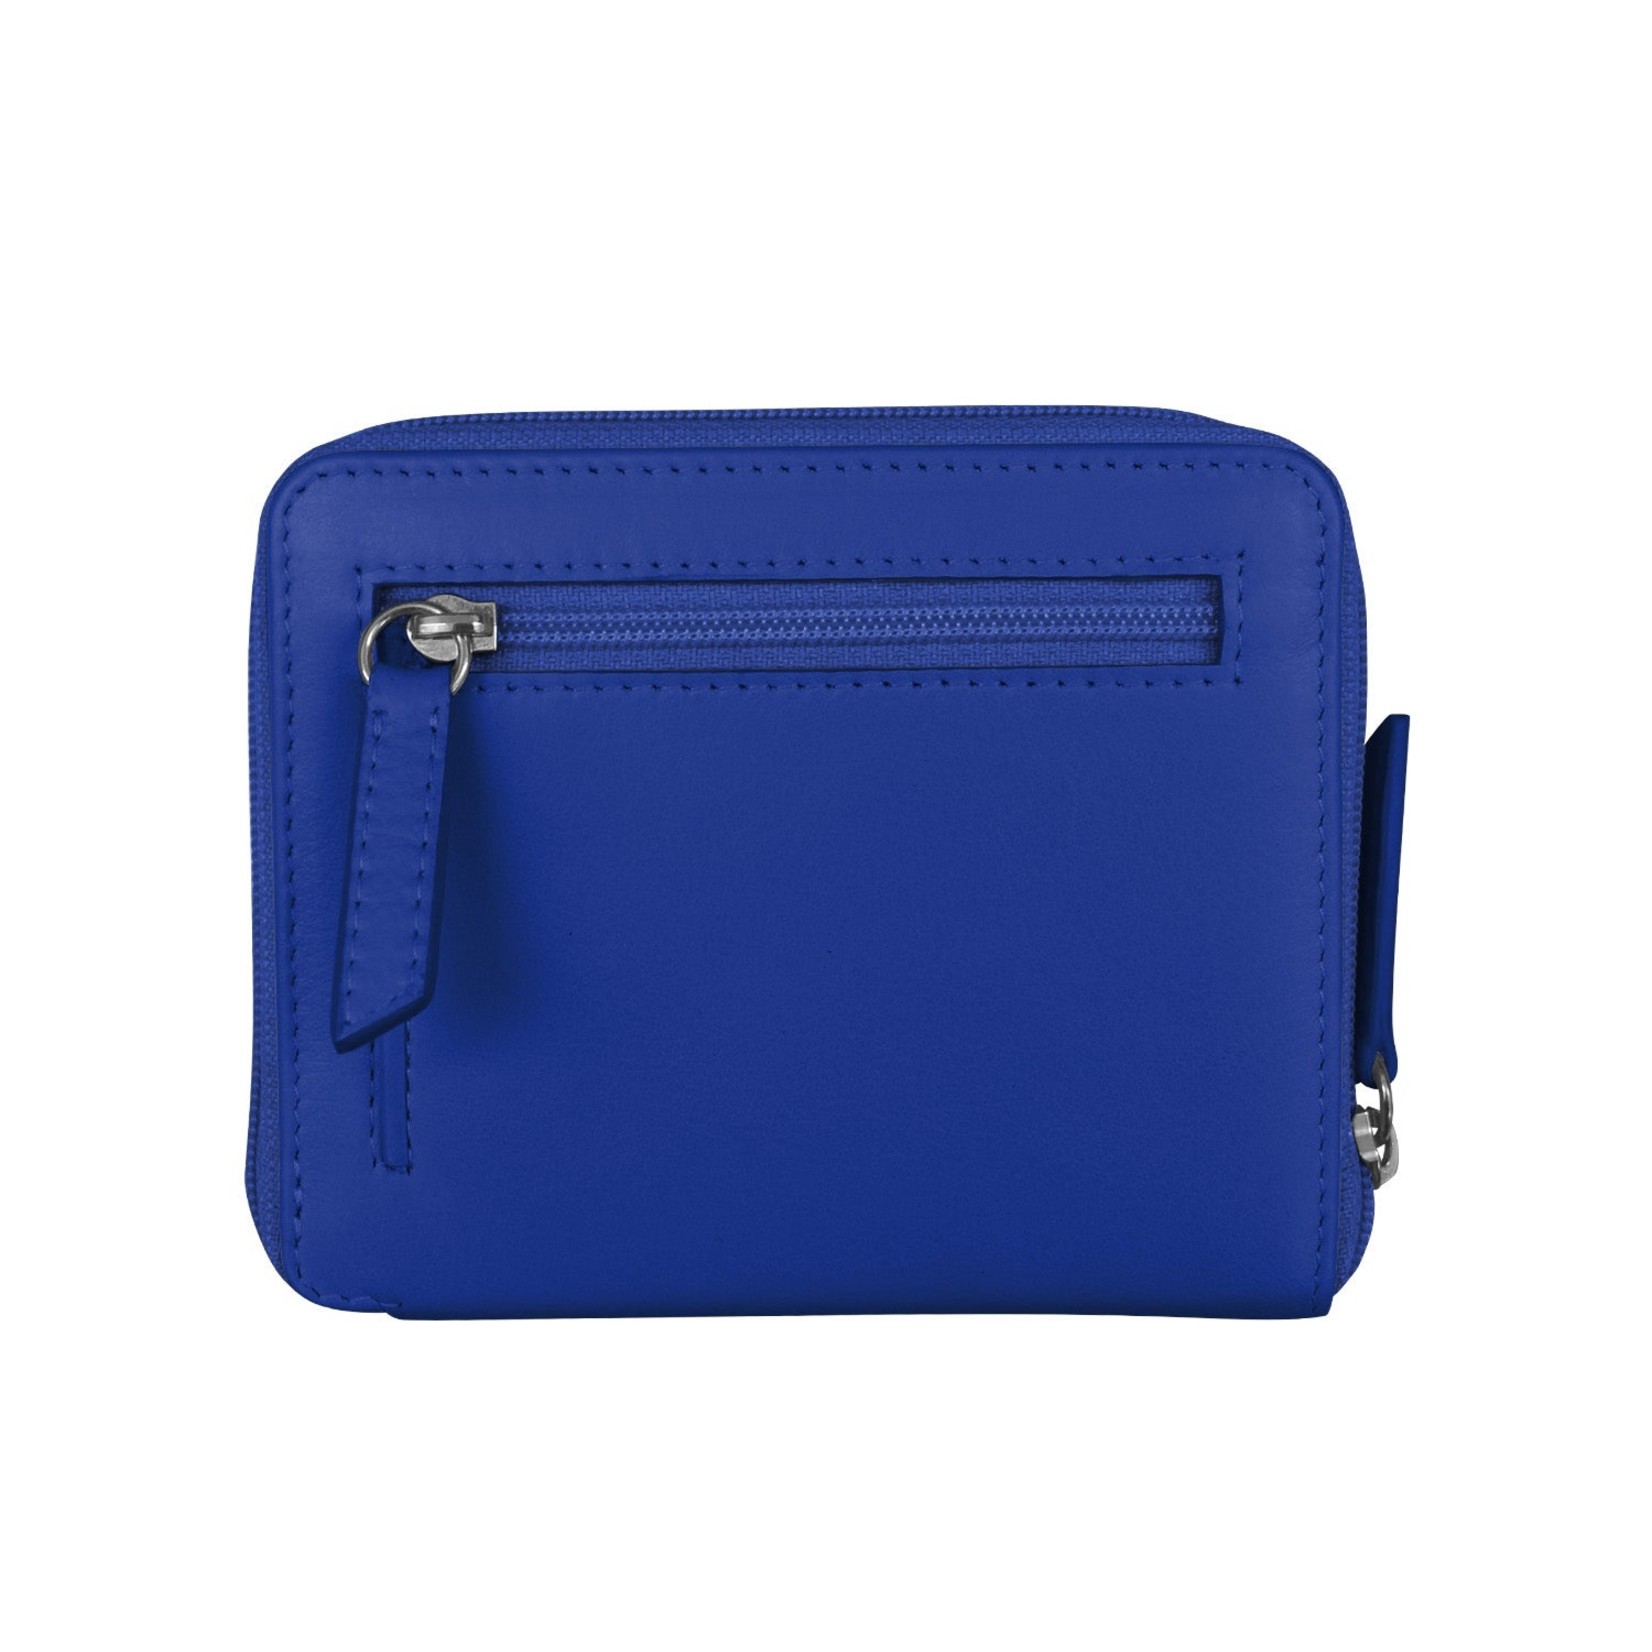 Leather Handbags and Accessories 7859 Cobalt - RFID Zip Around Wallet